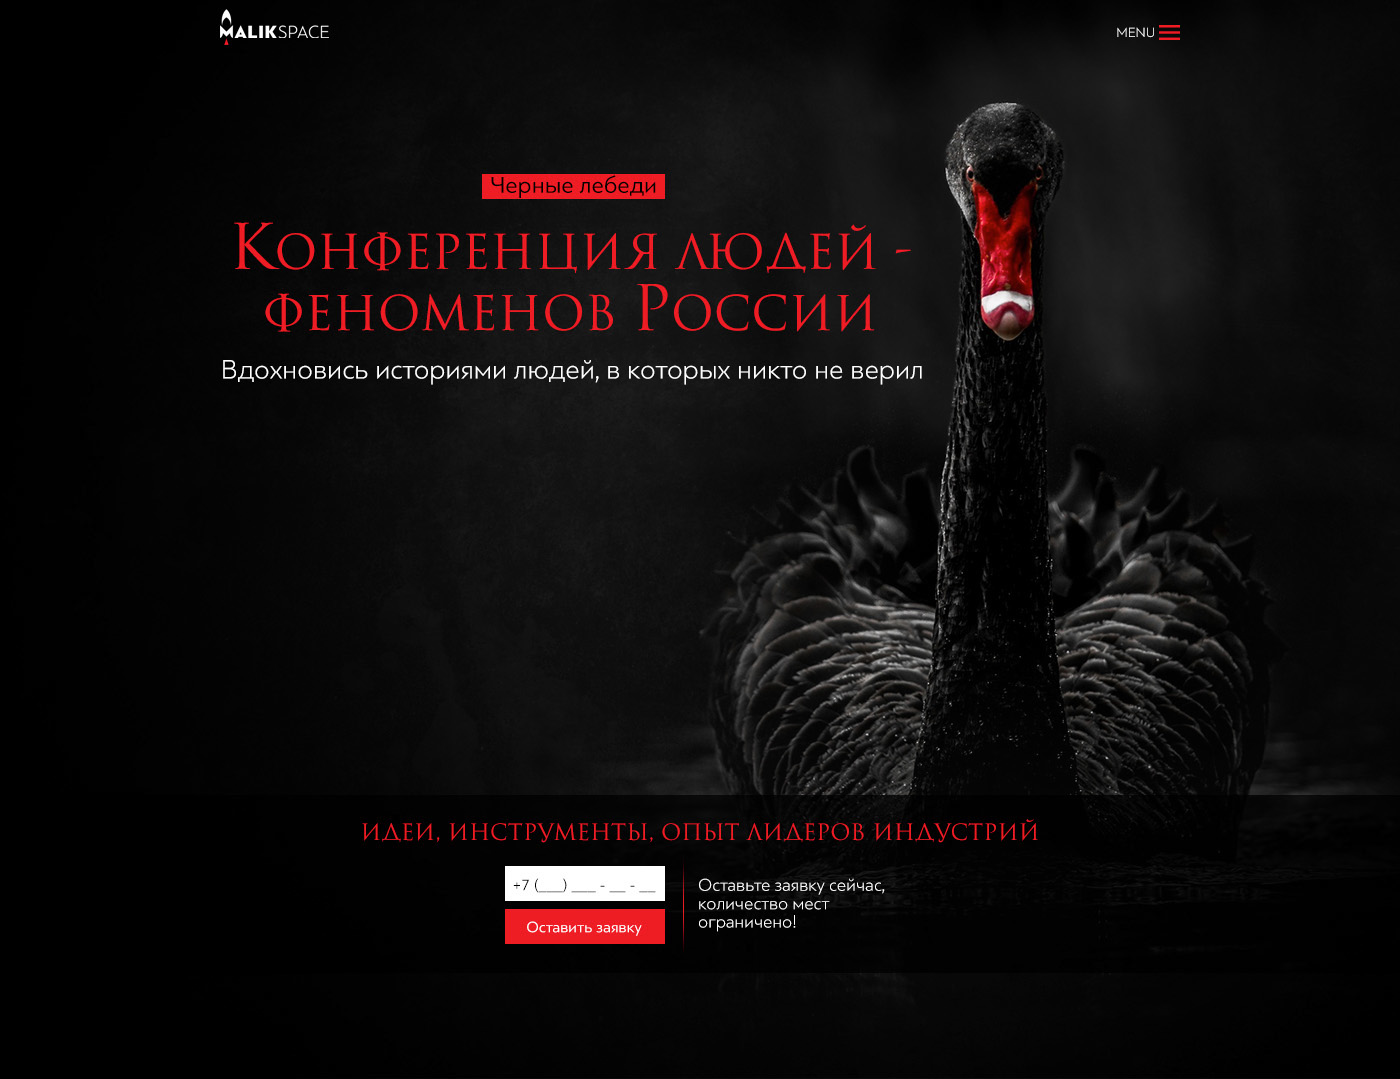 Event black swan black swan landing page Web design